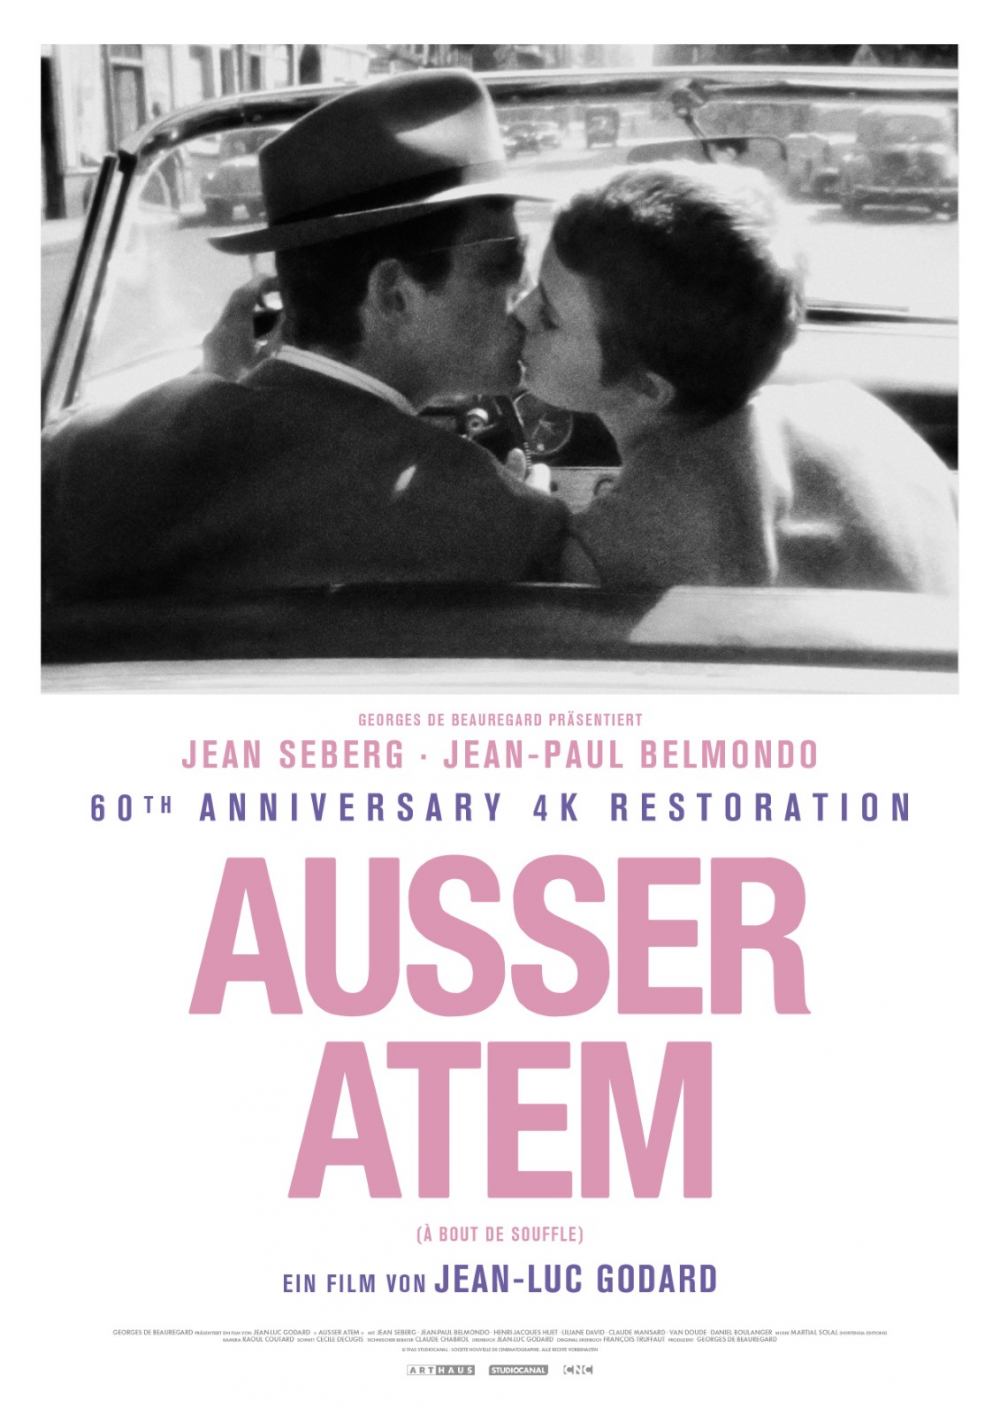 Filmplakat: In memoriam Jean-Luc Godard (im Kino achteinhalb)